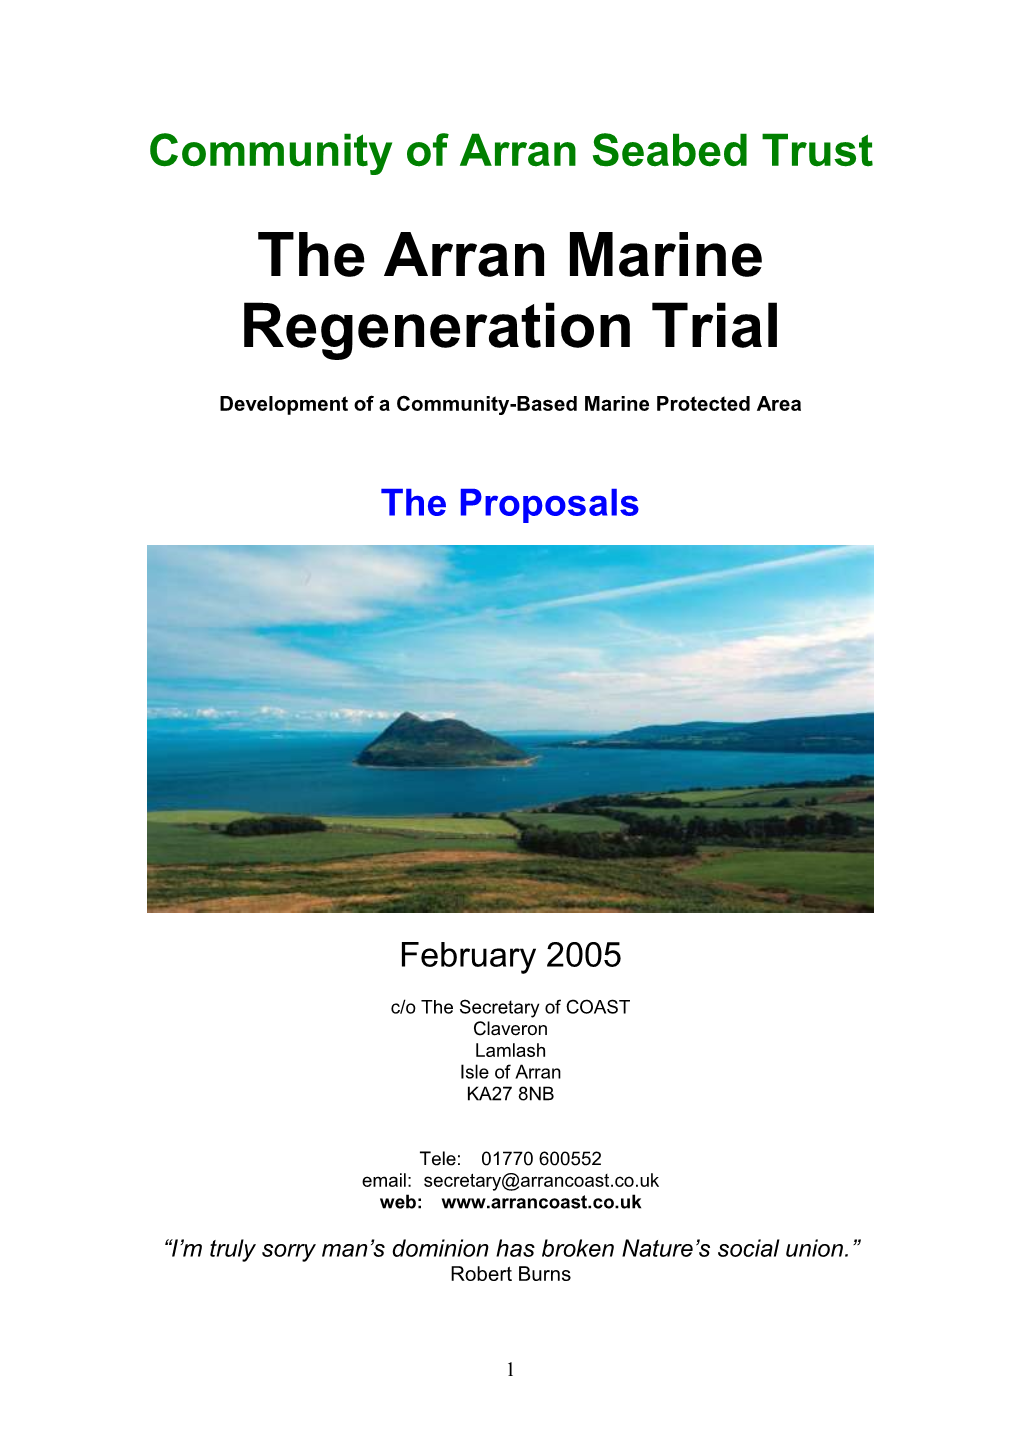 The Arran Marine Regeneration Trial